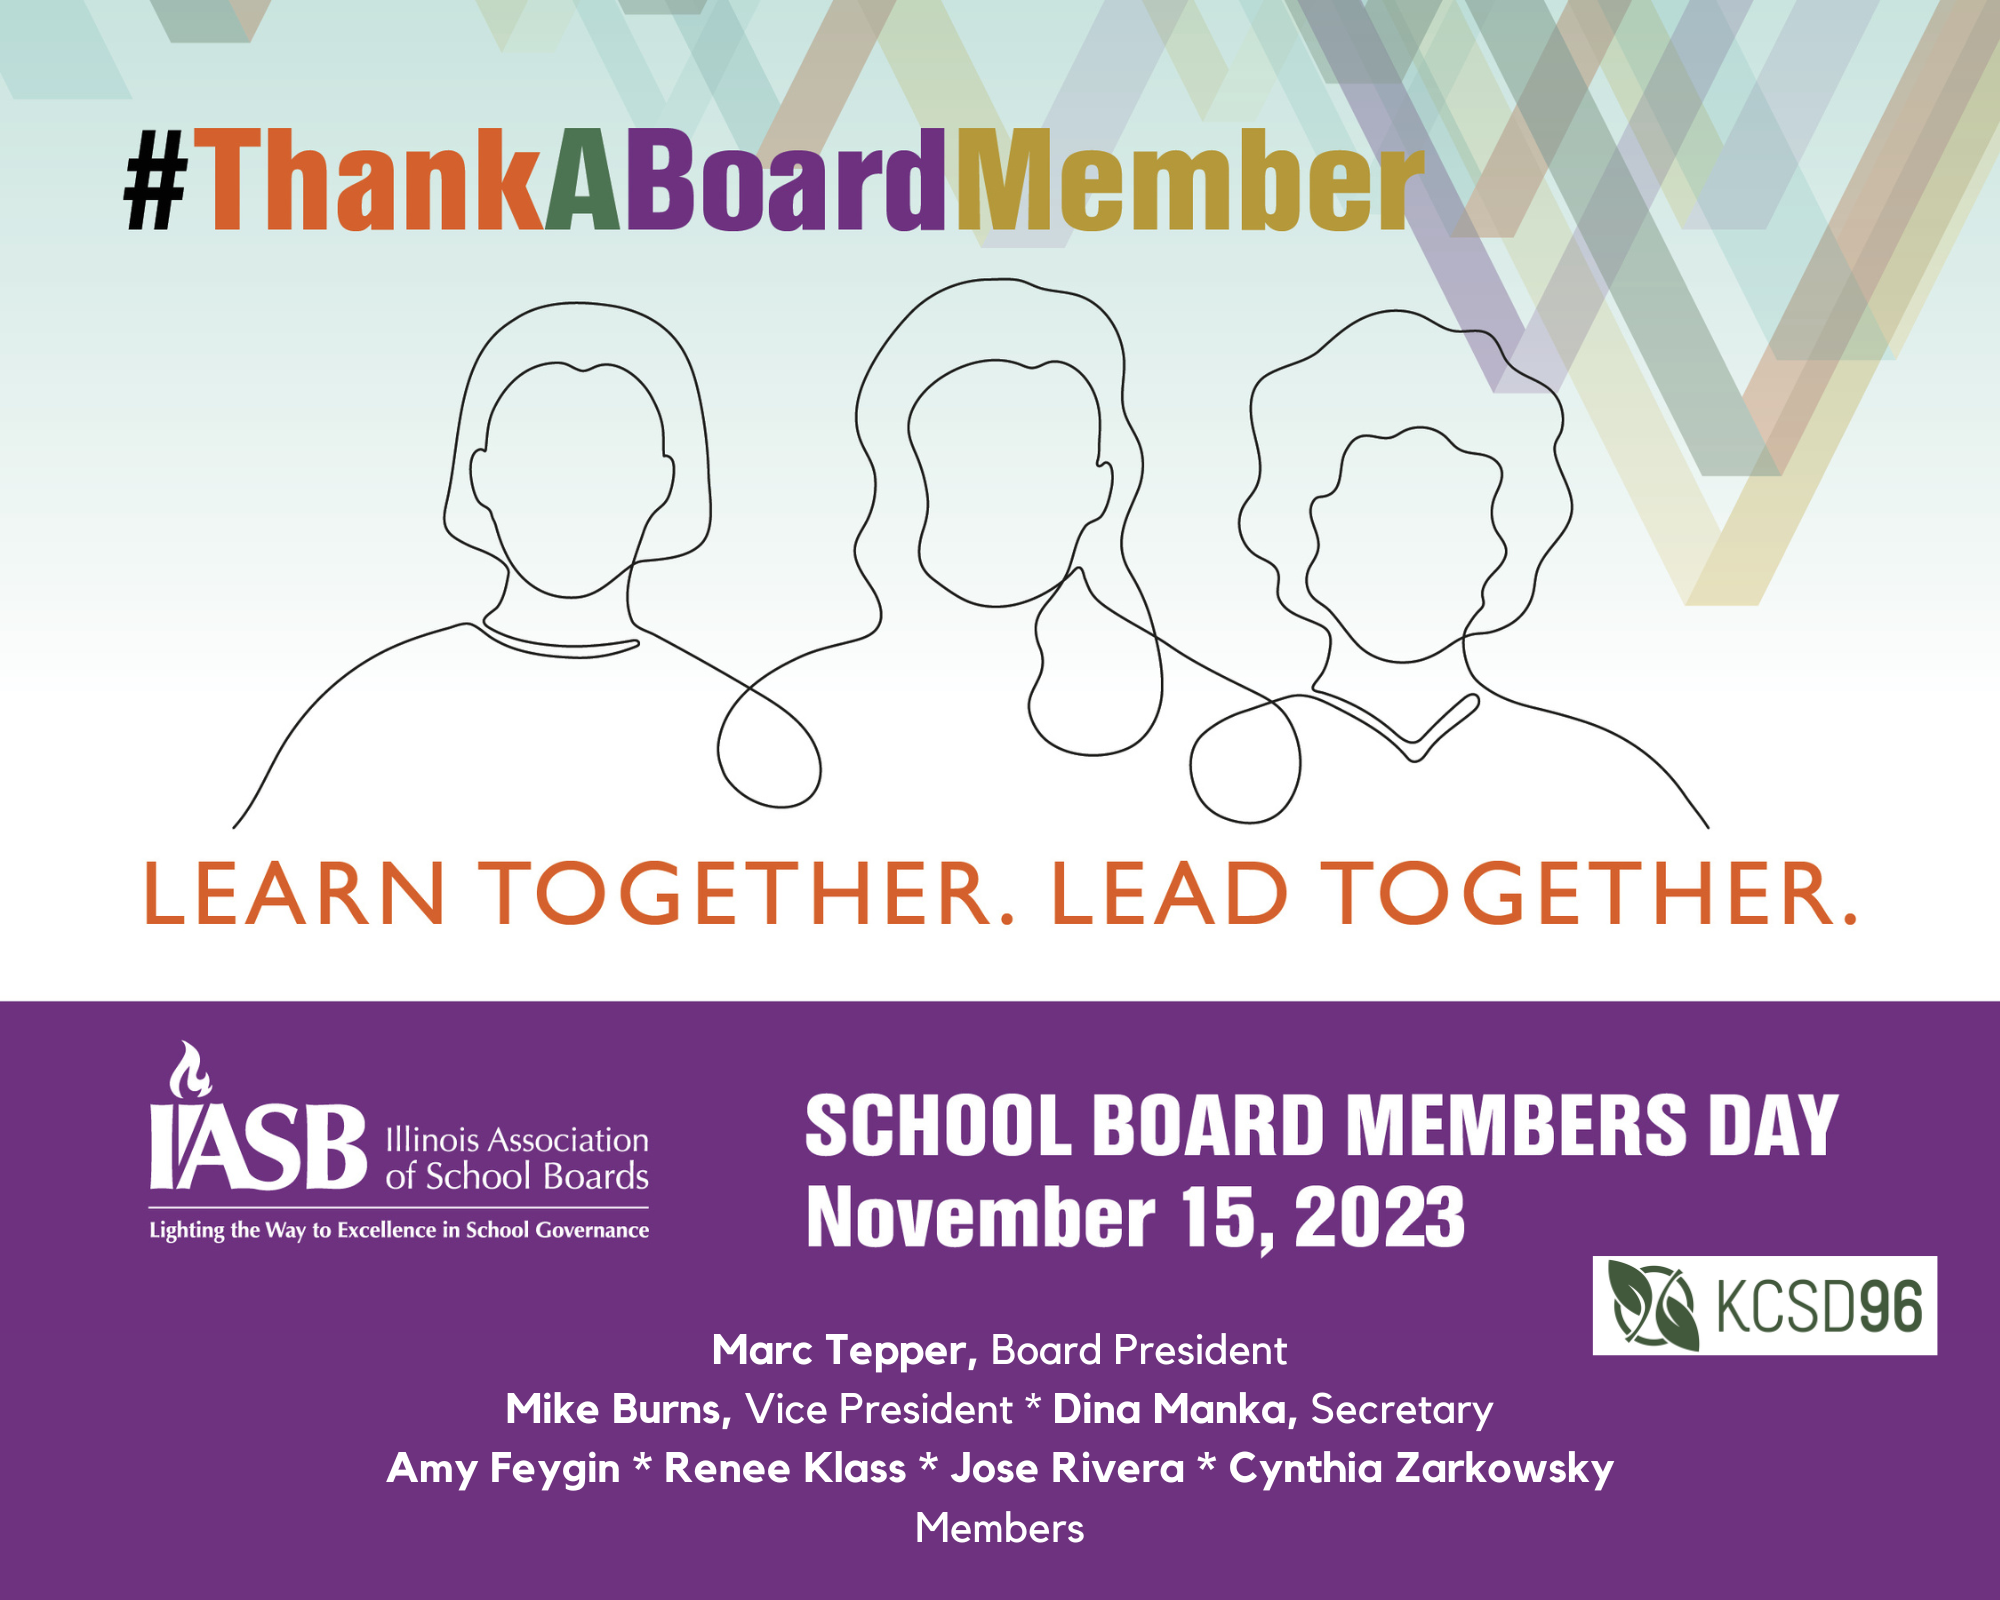 School Board Members Day: November 15, 2023